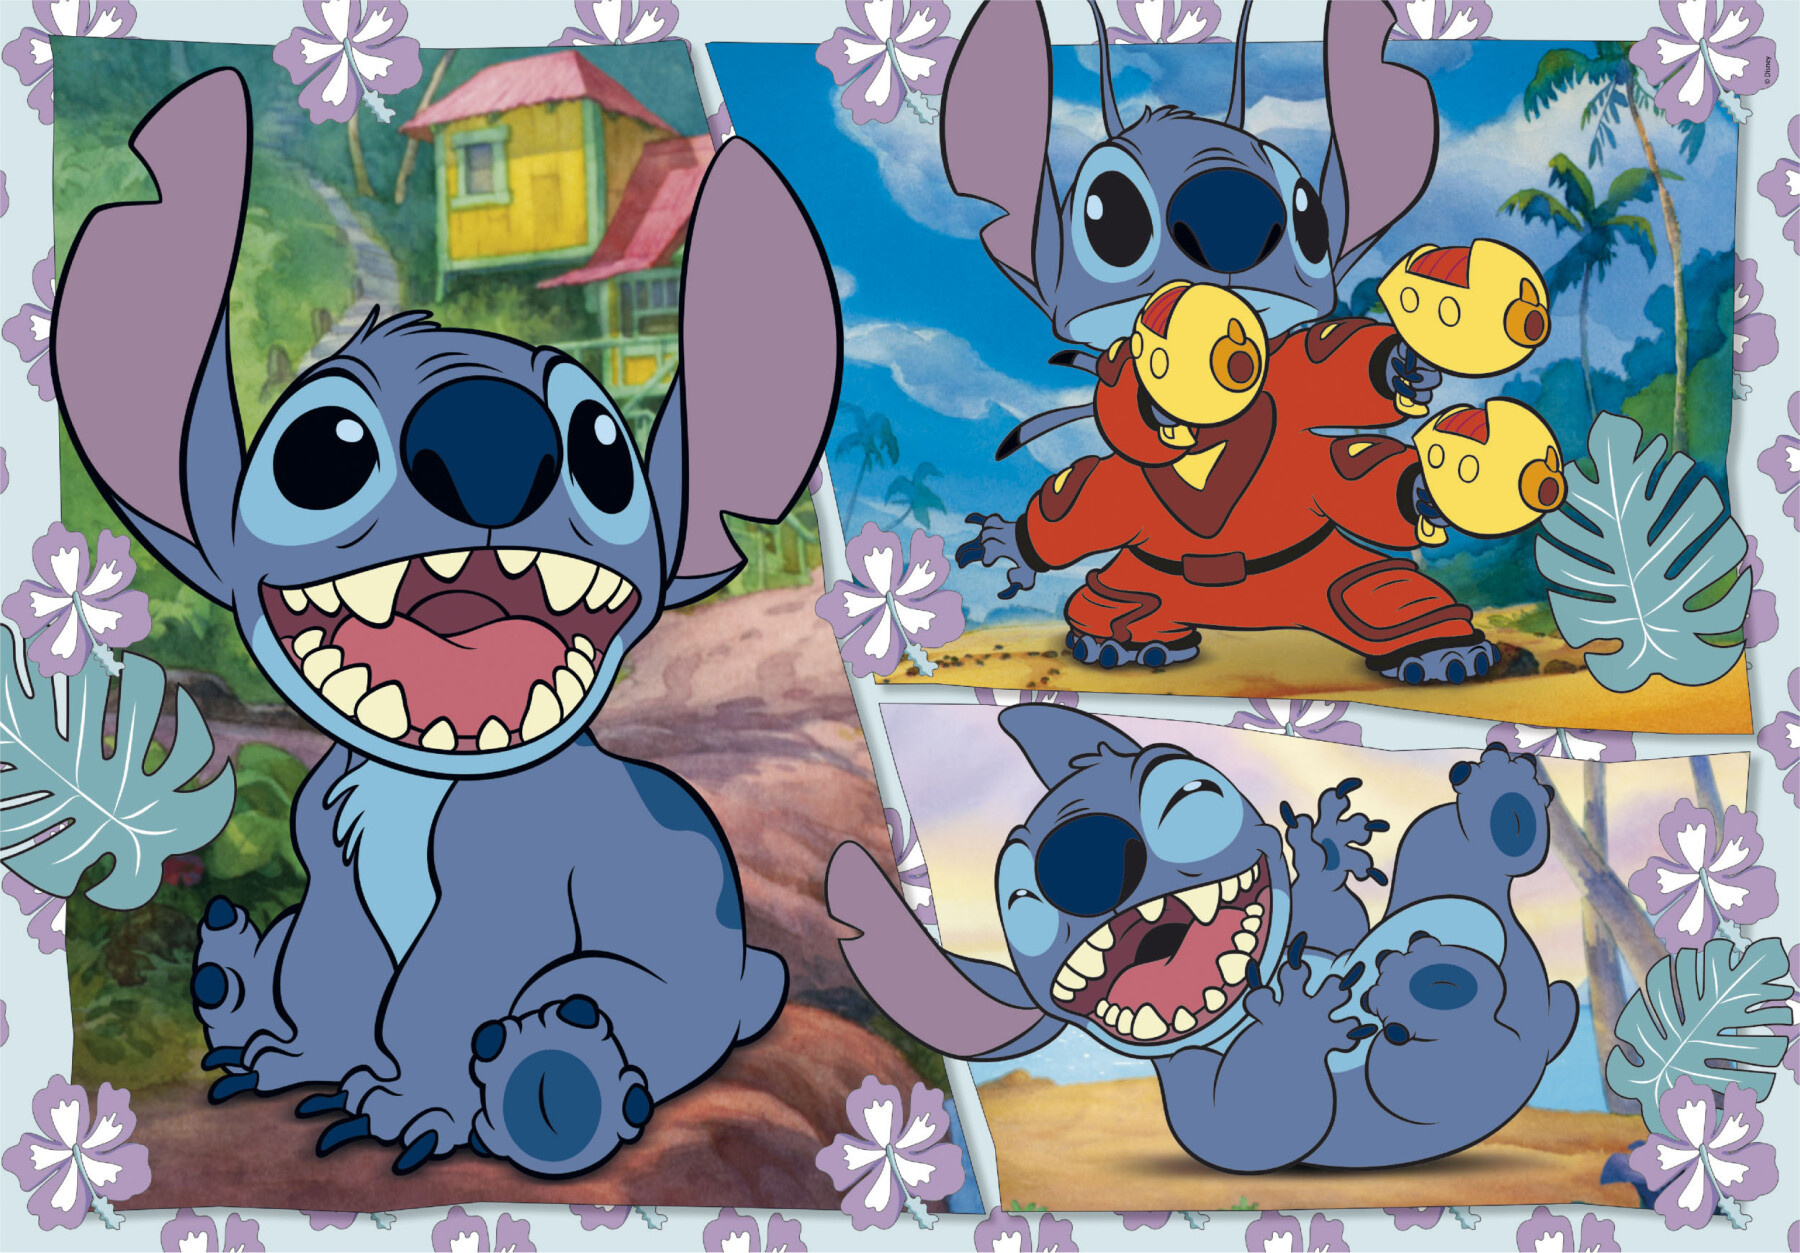 Puzzle maxi 104 stitch - Disney Stitch